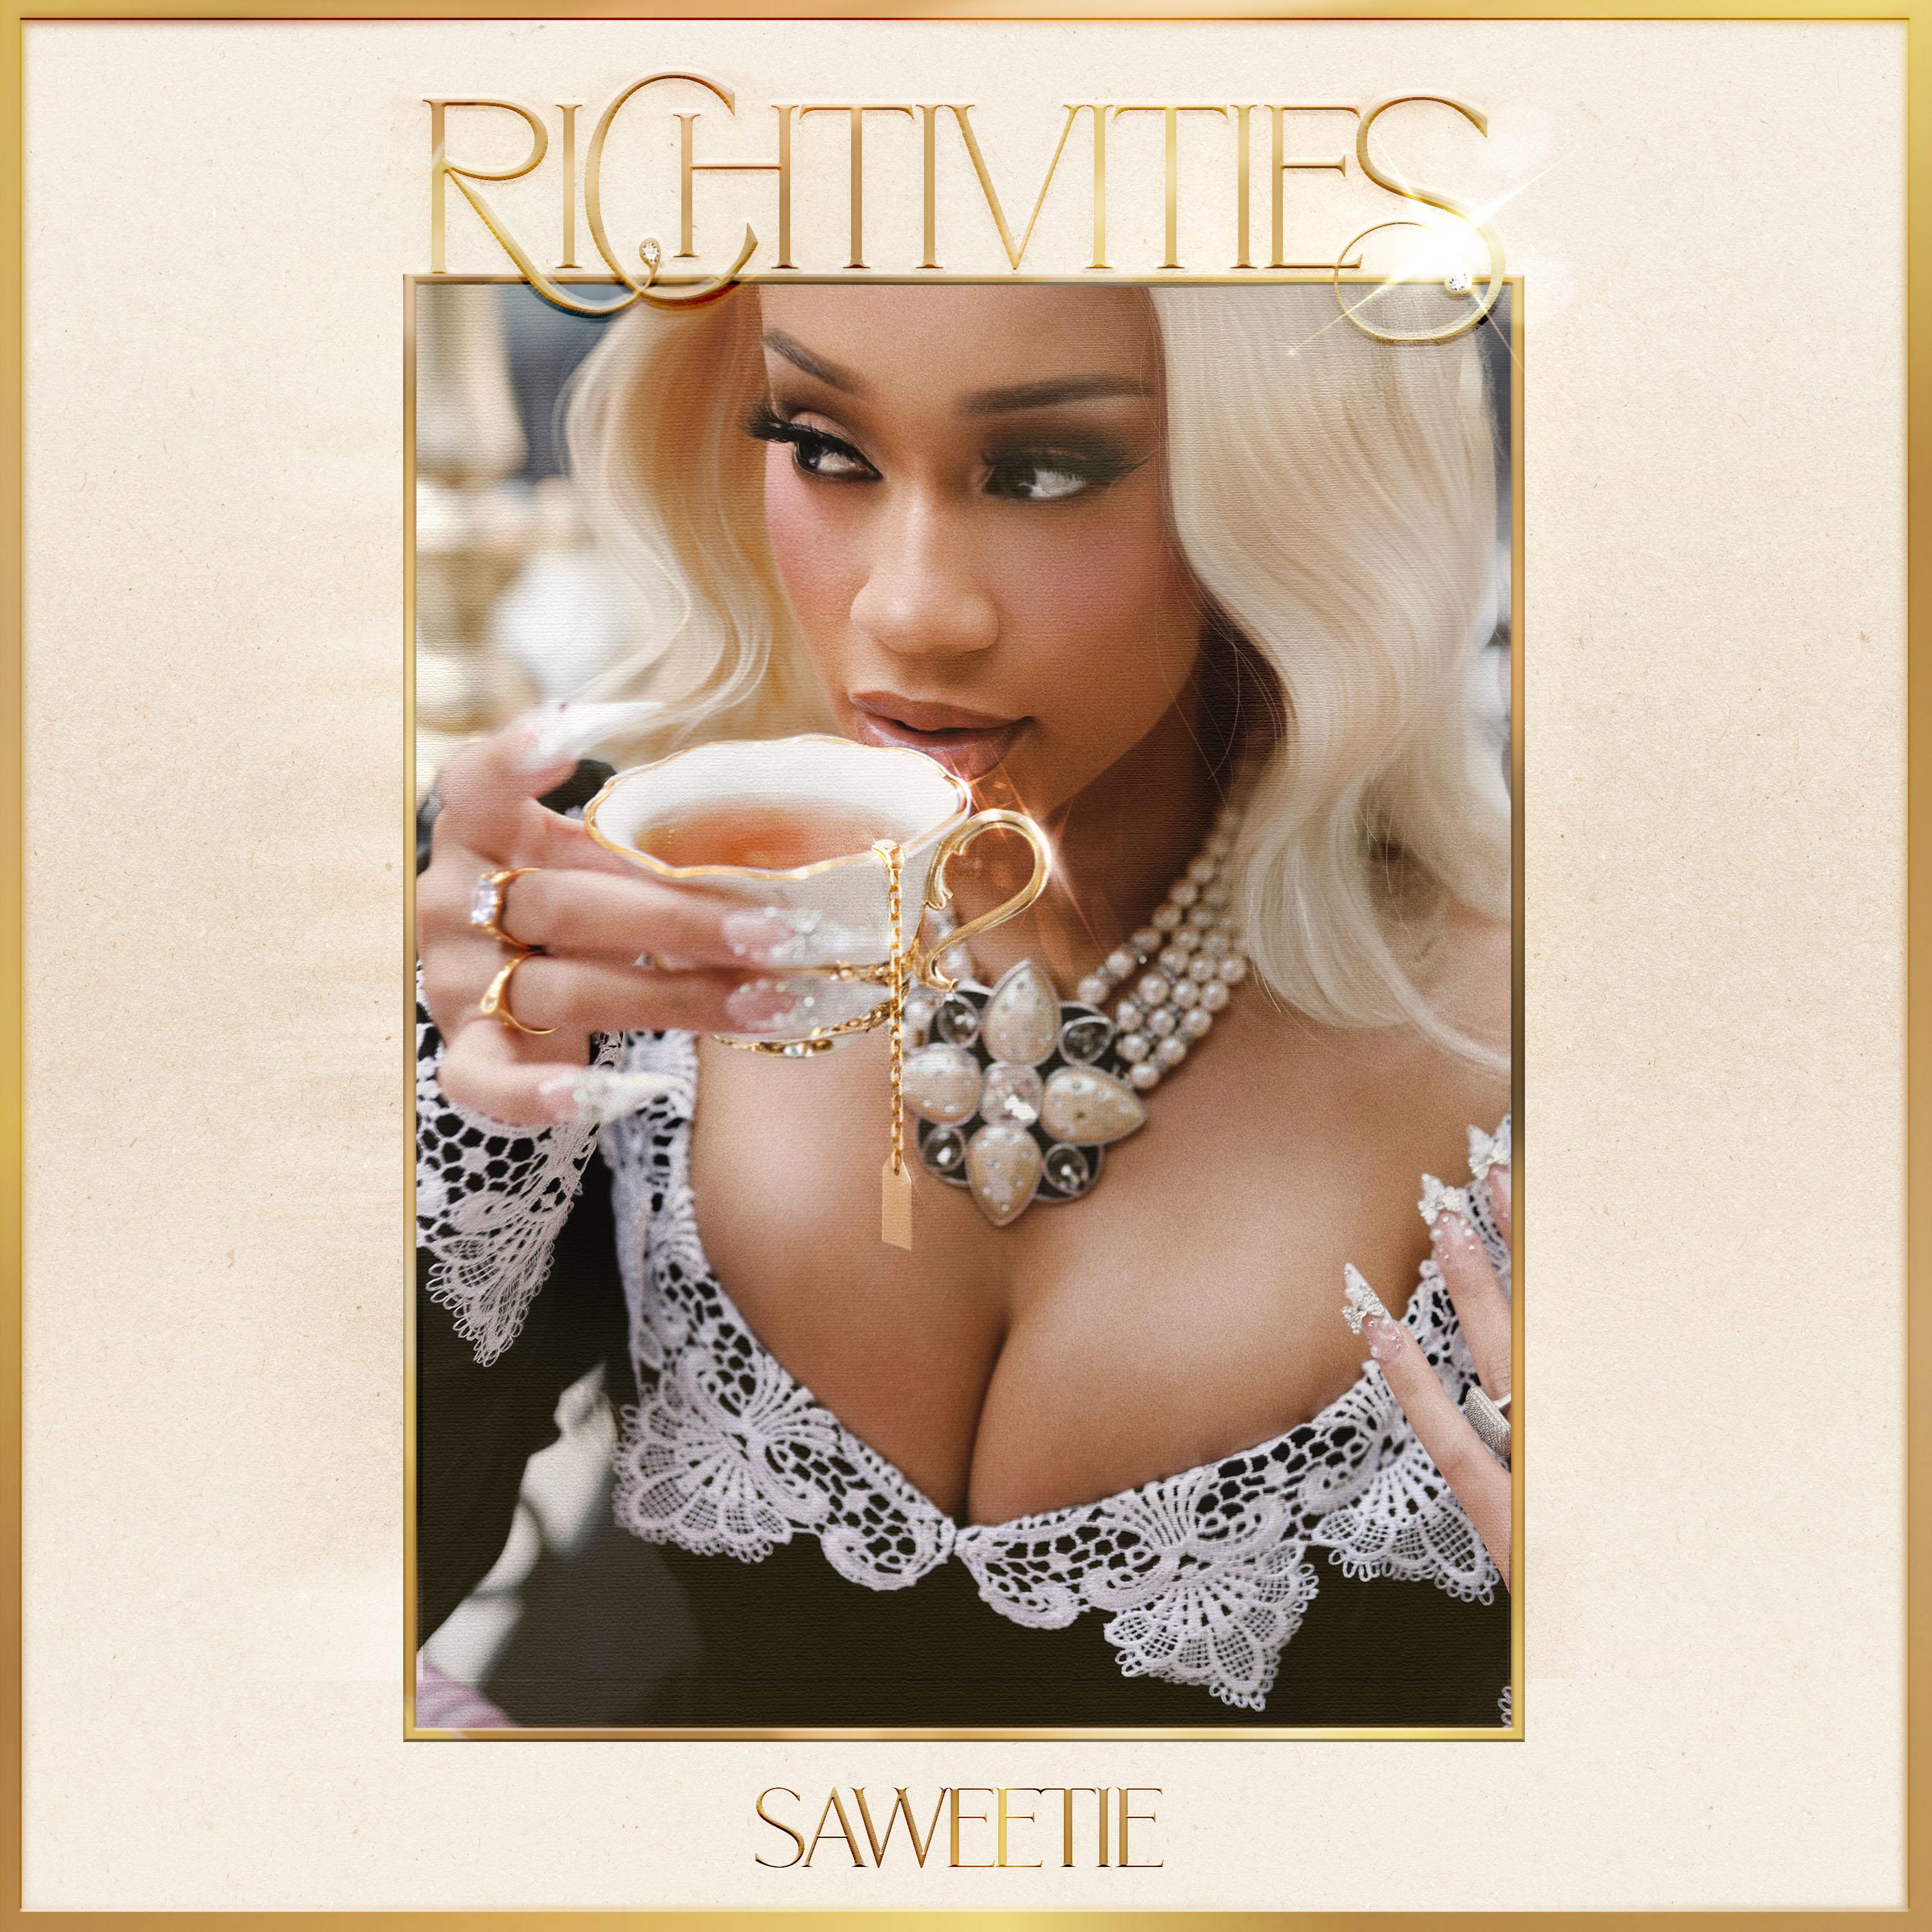 Saweetie - Richtivities (Extended Intro)